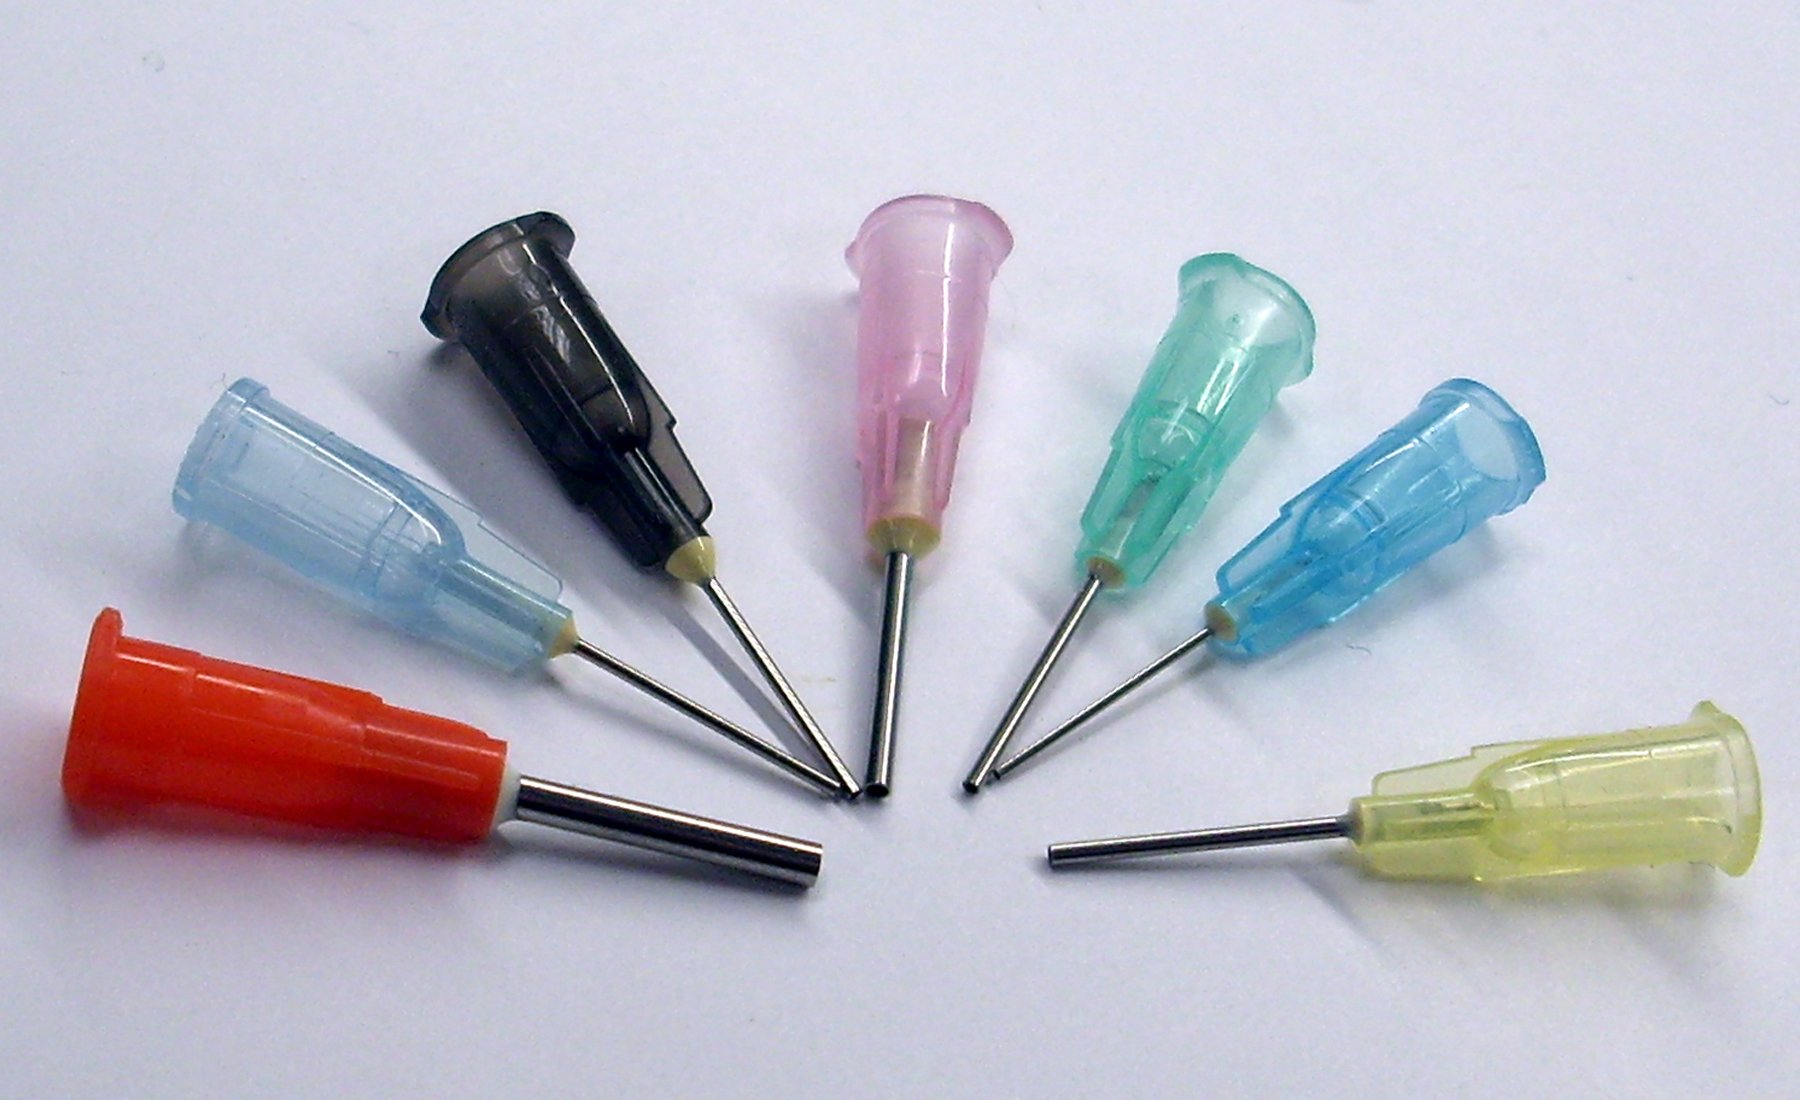 Creative Hobbies 21 Gauge 0.5 Inch Precision Applicator Dispenser Needle for sale online 